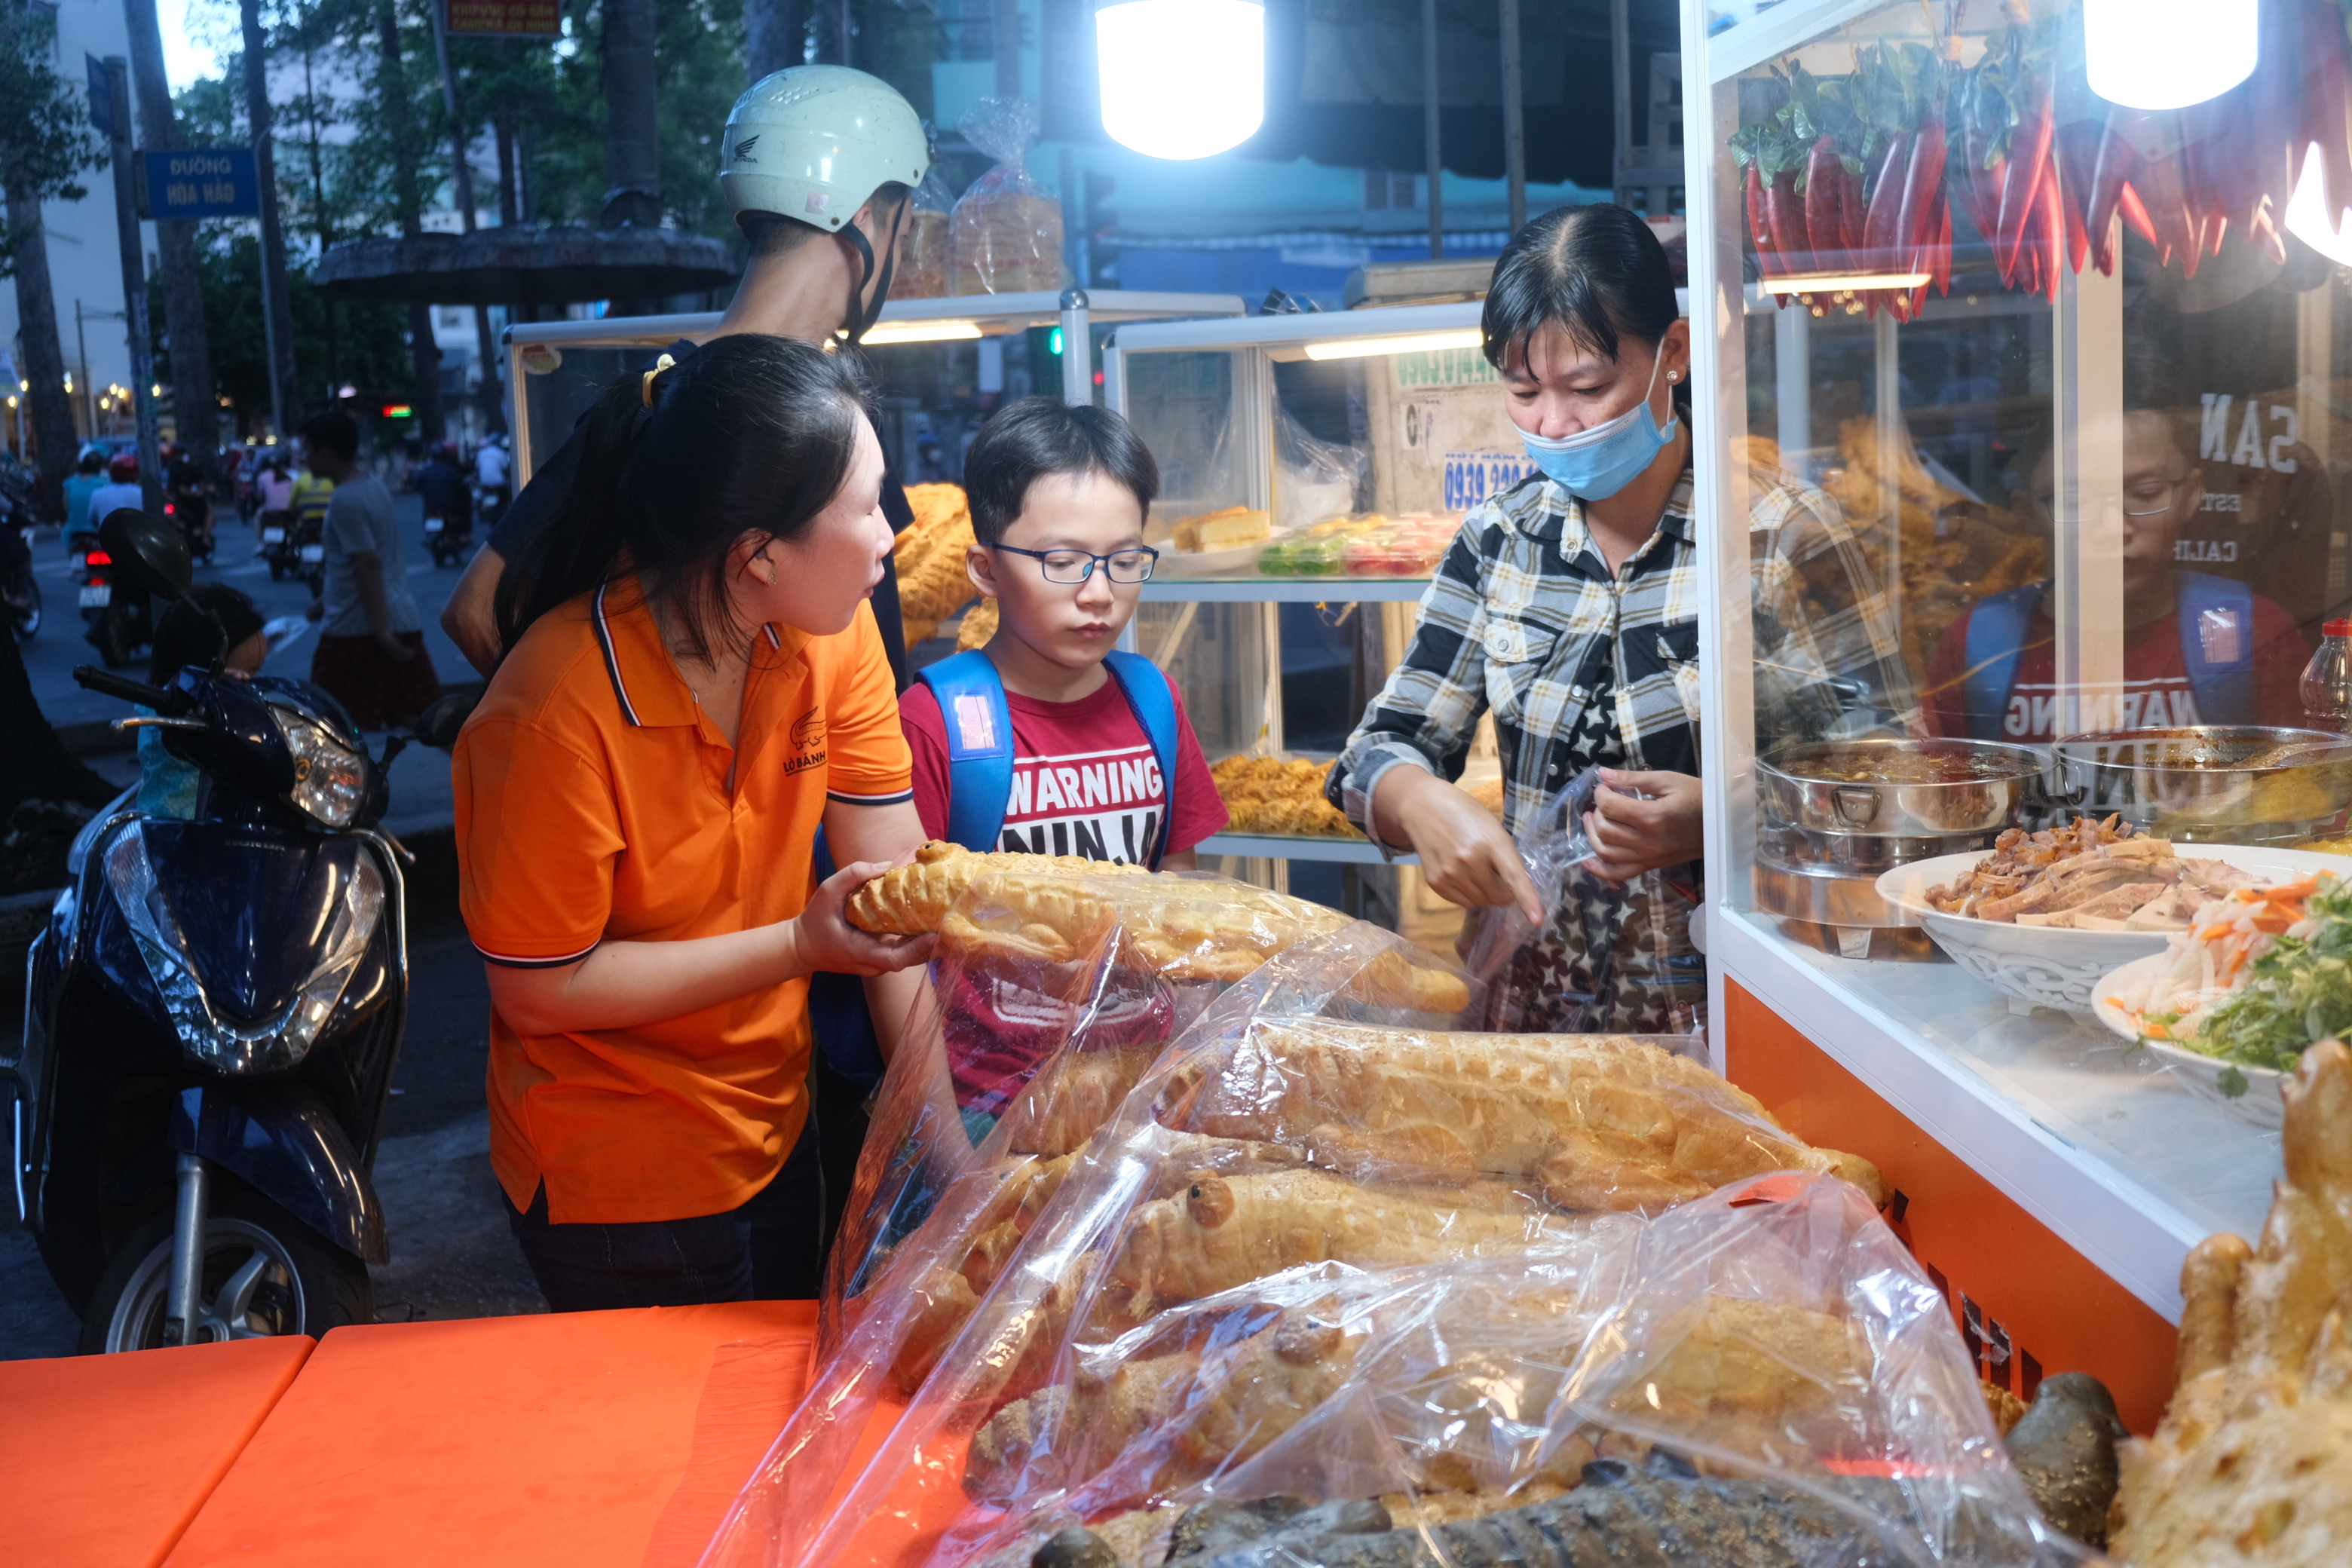 Customers buy animal-shaped breads at 7.7 Bakery. Photo: Ngoc Phuong / Tuoi Tre News